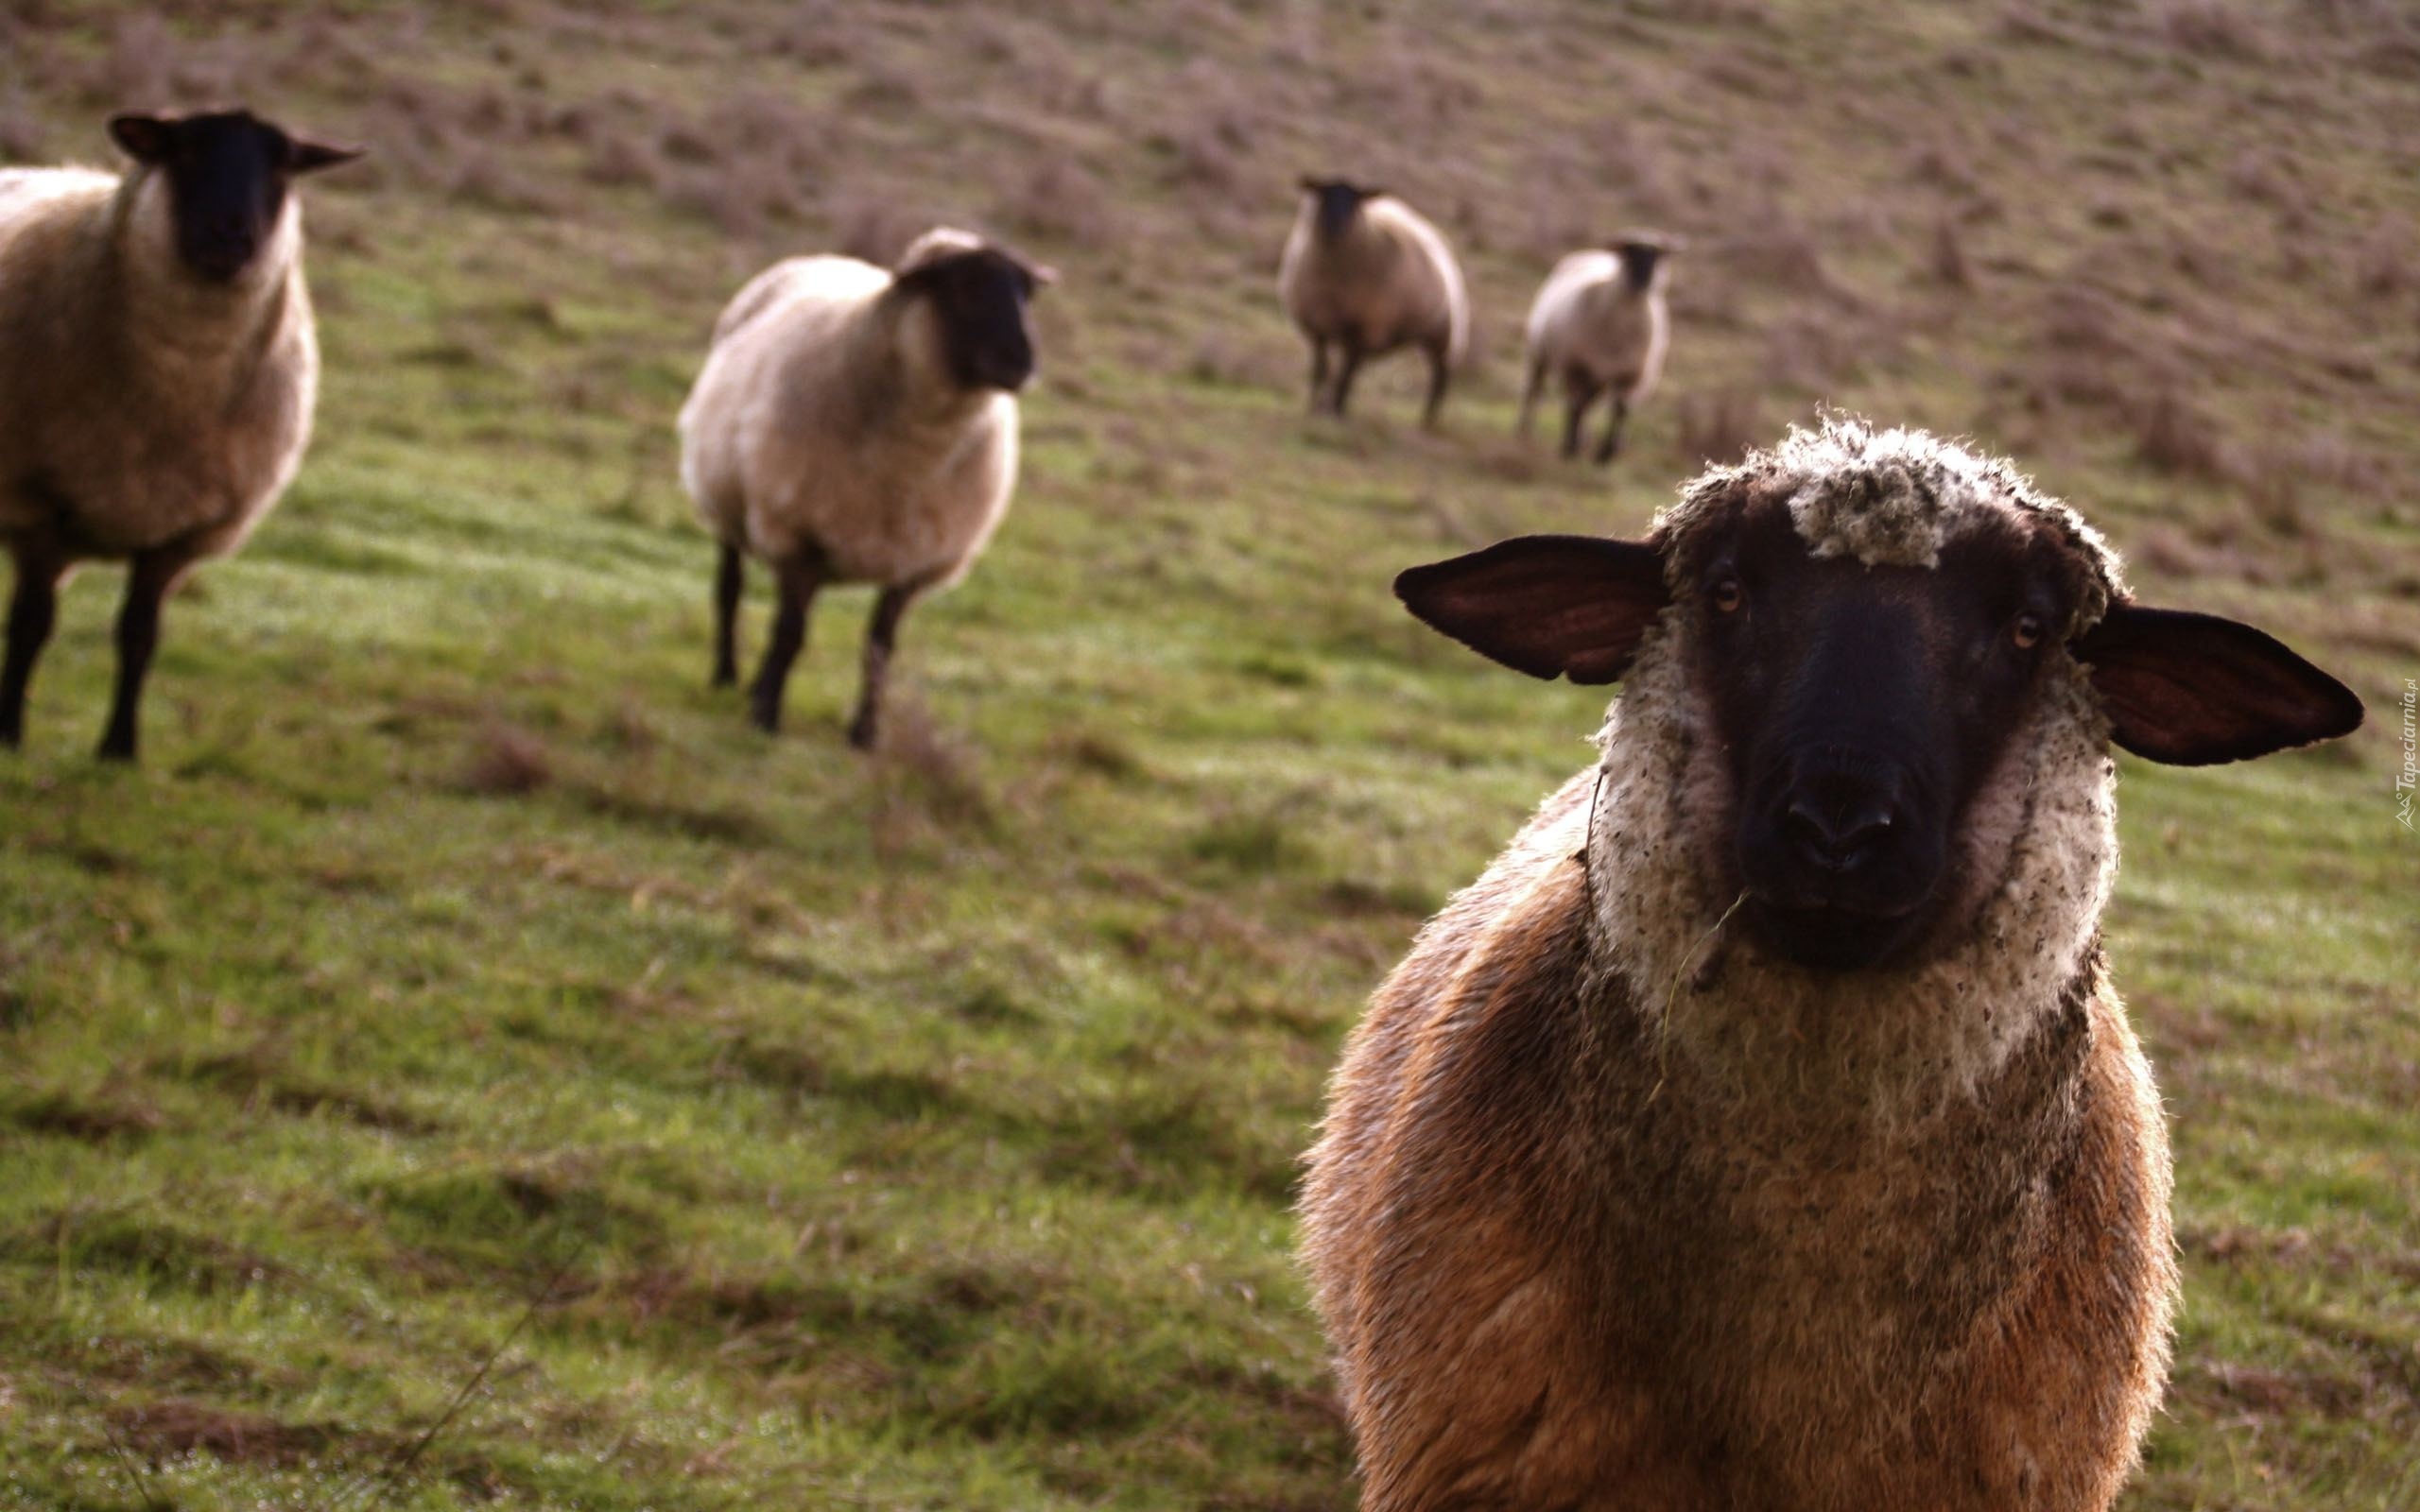 Pastwisko, Owce